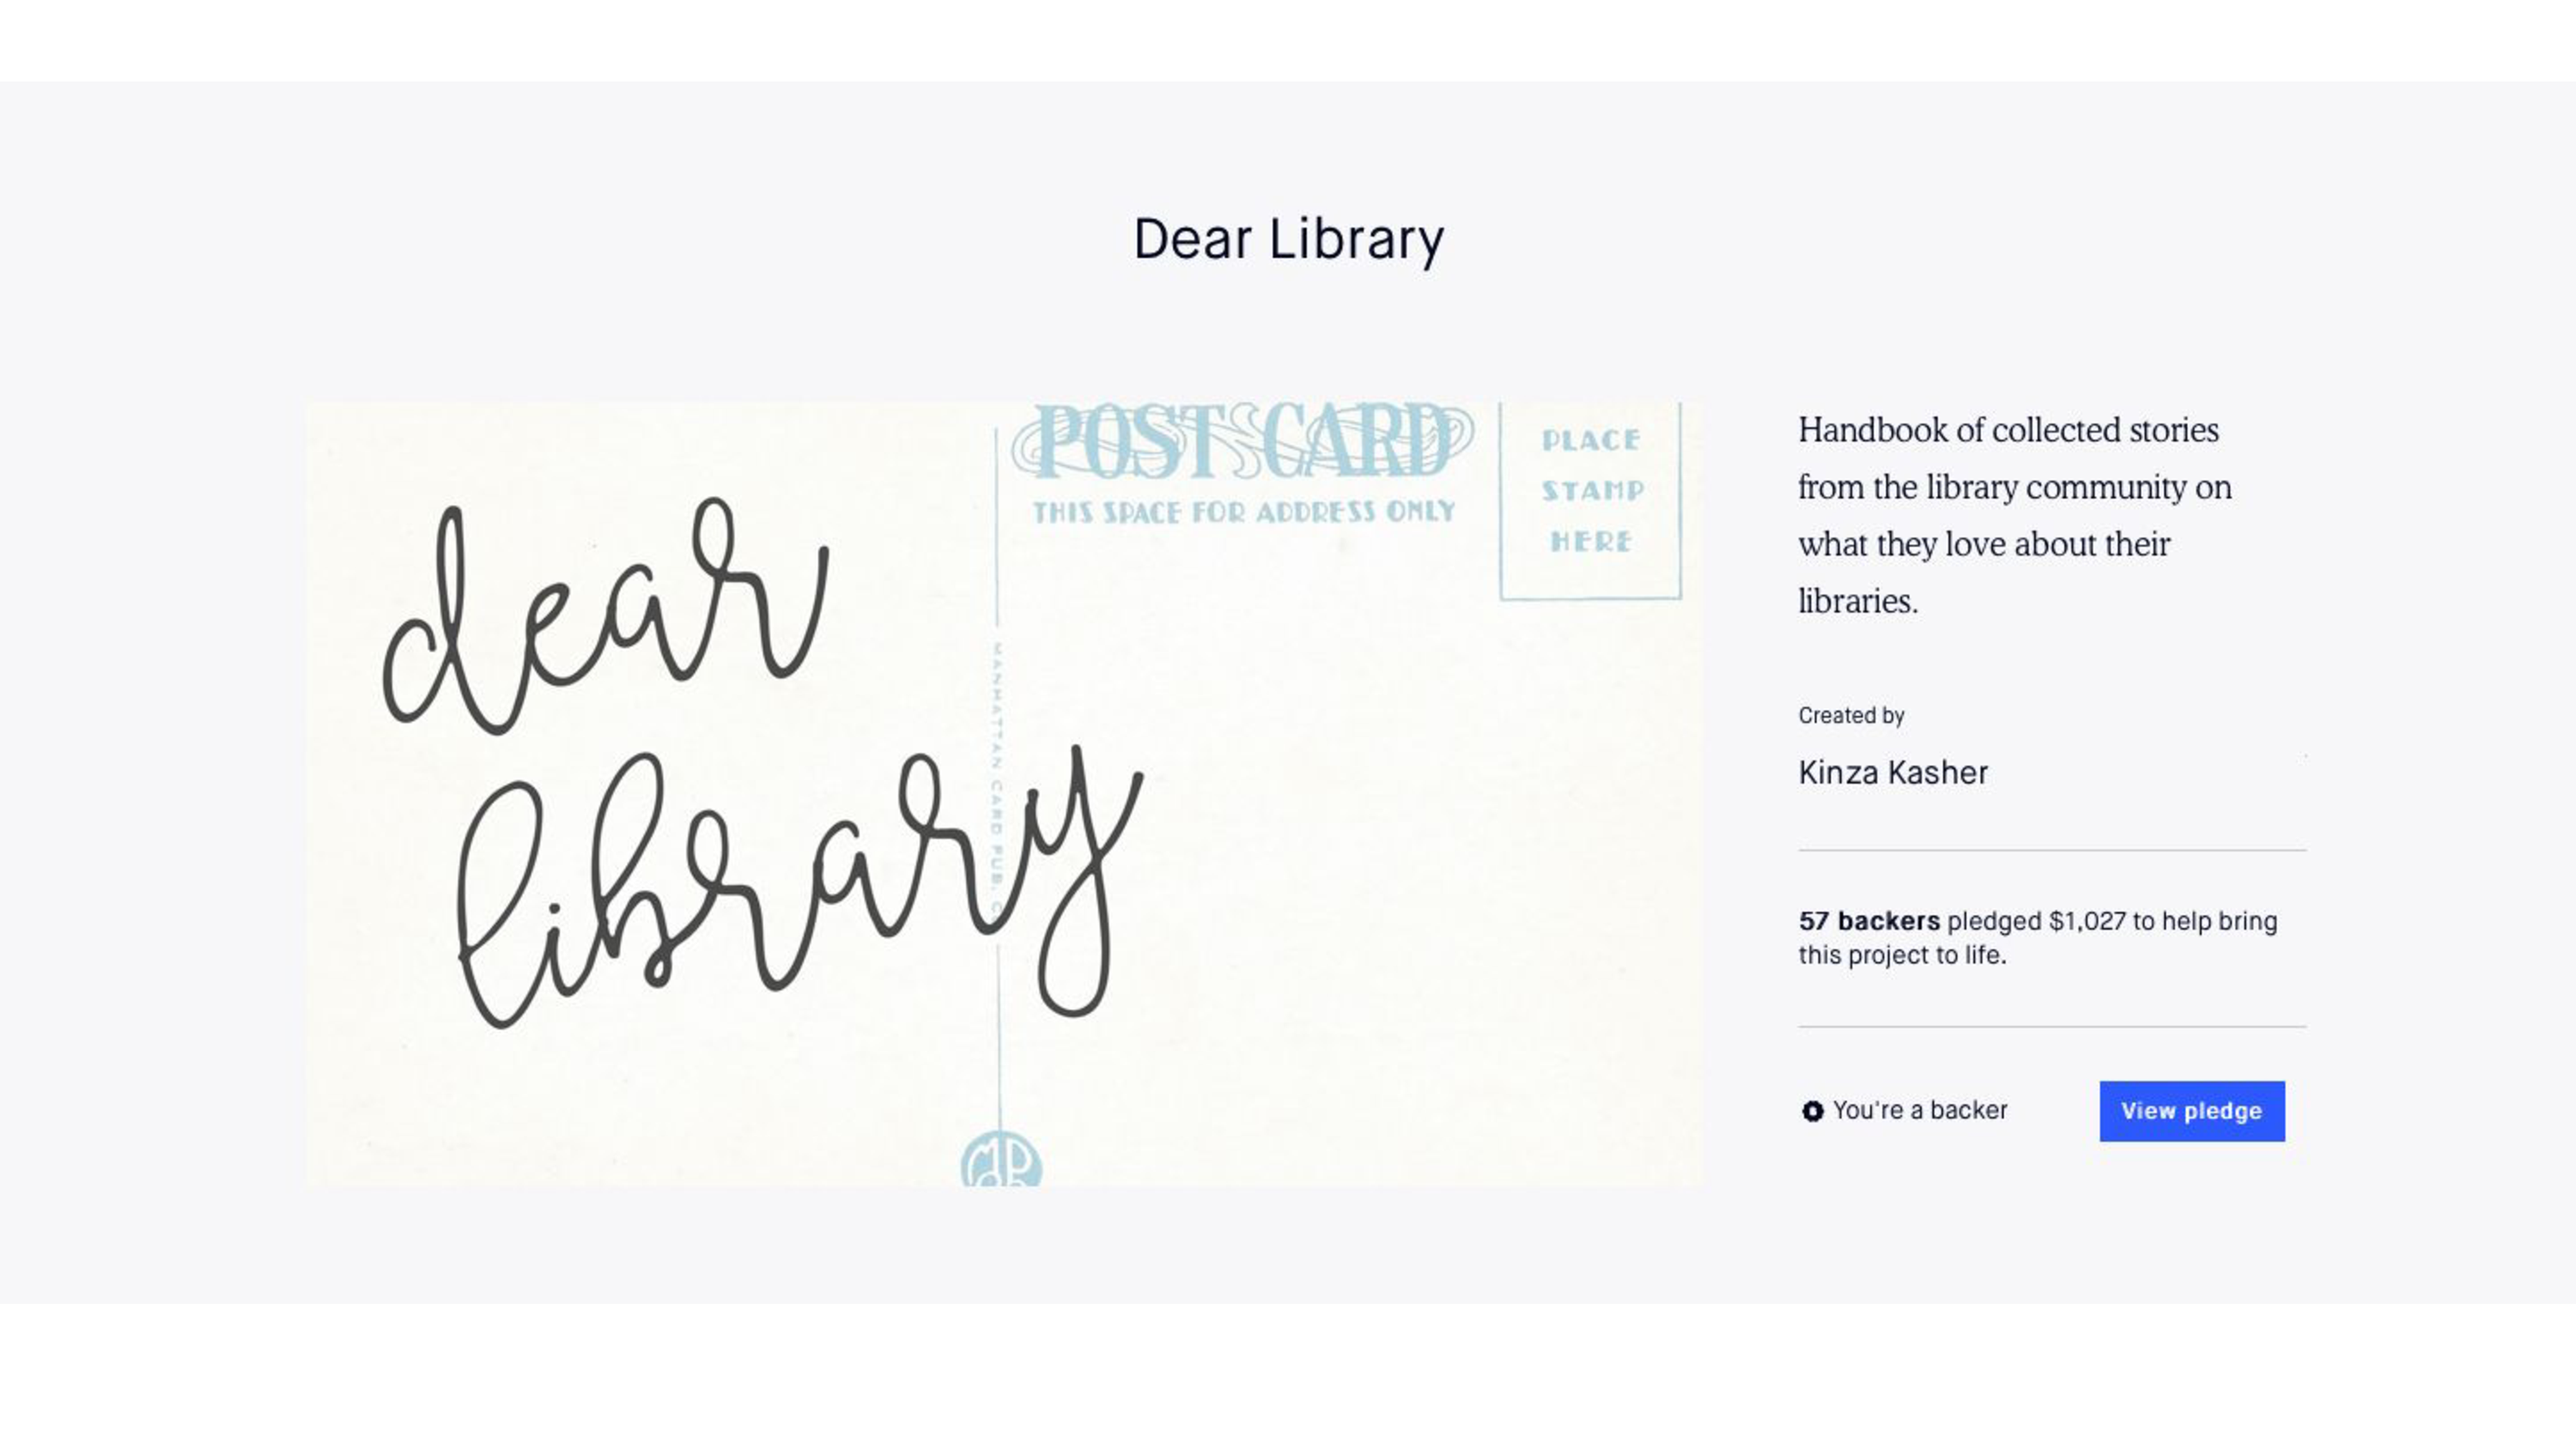 Dear Library, a Kickstarter project by Kinza Kasher